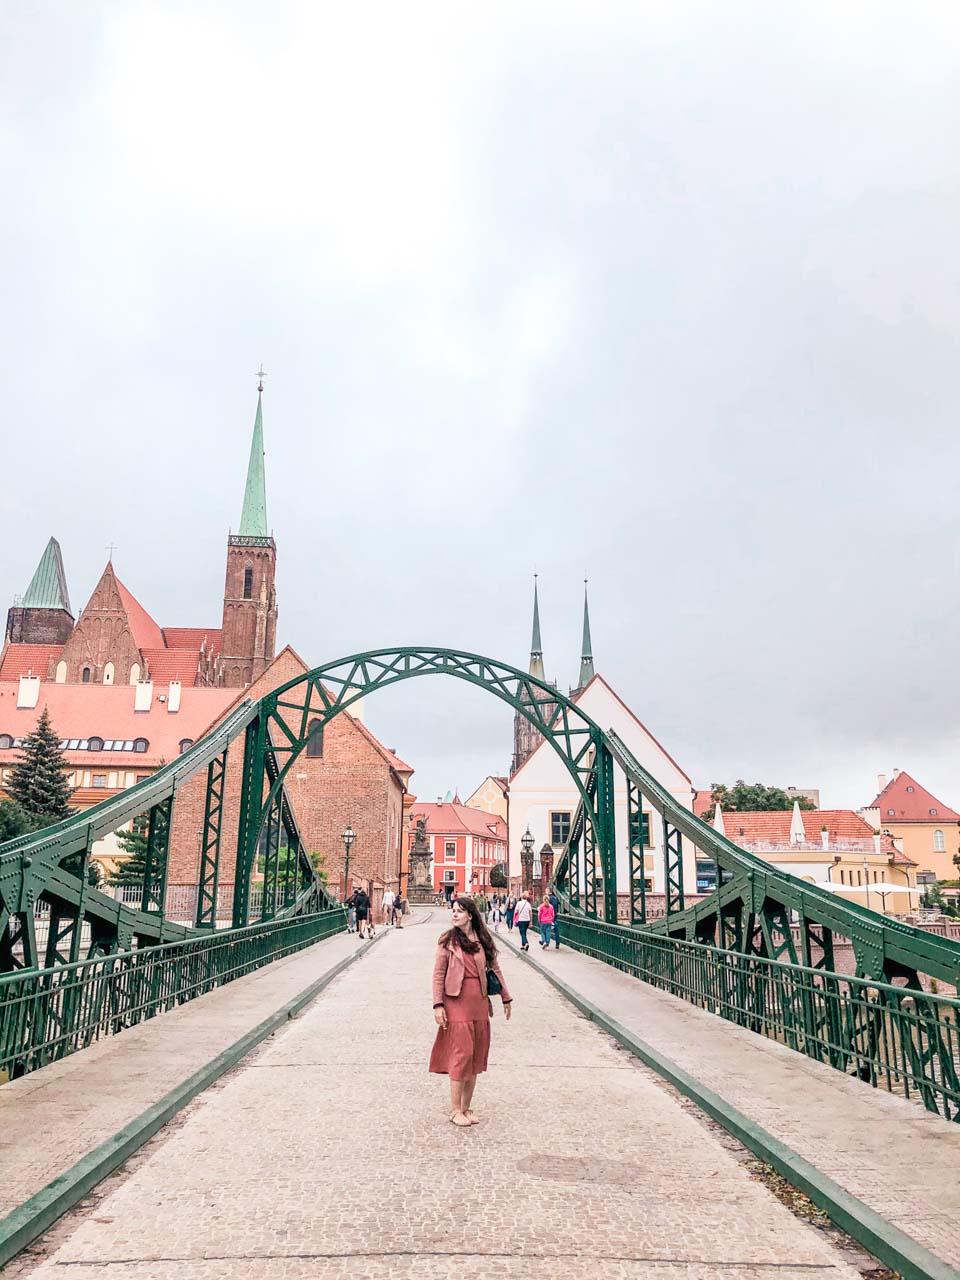 A woman in a pink dress standing on the Tumski Bridge in Wrocław